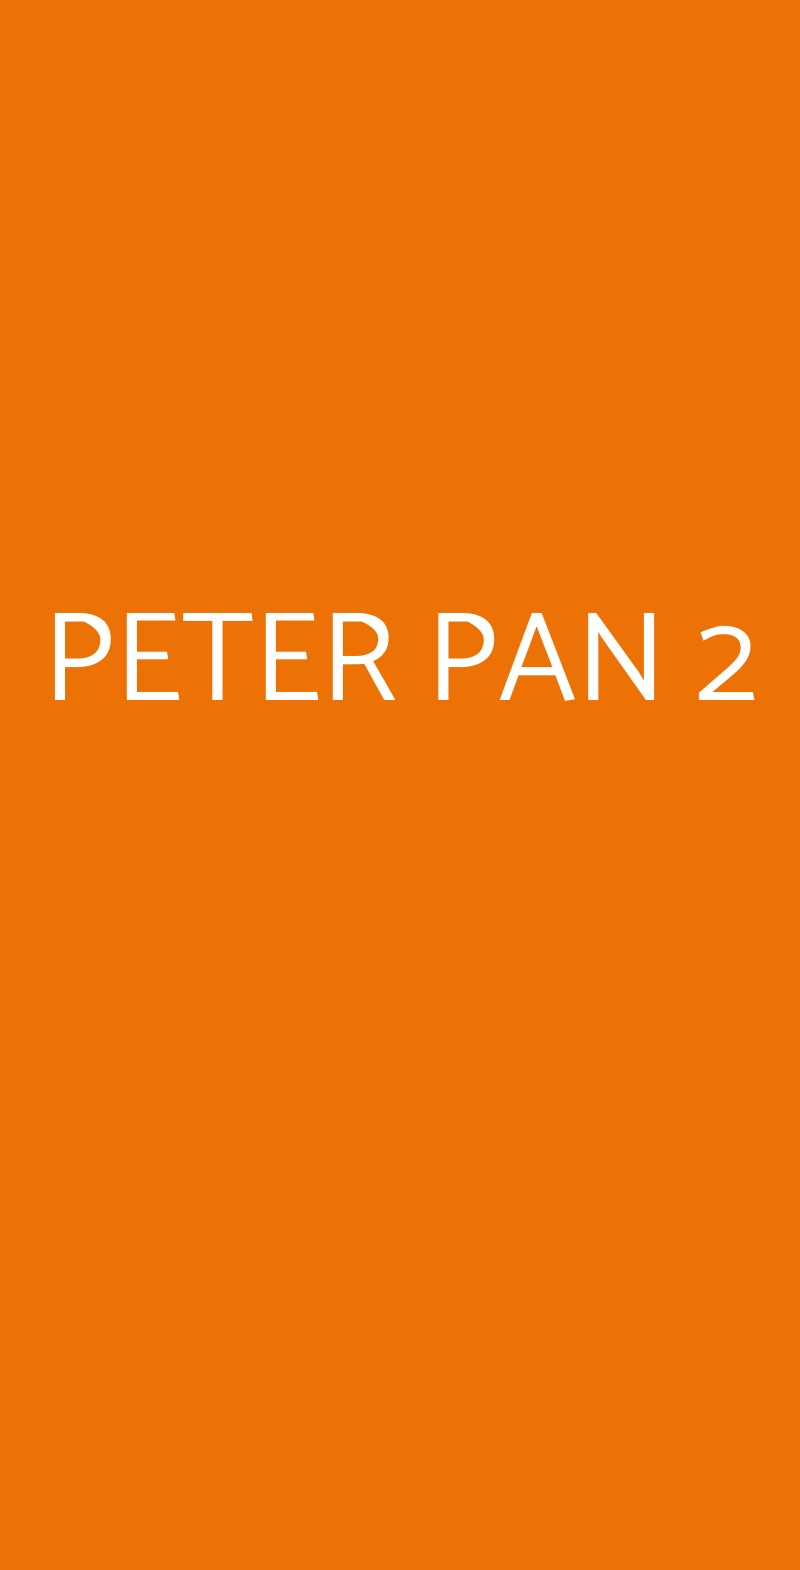 PETER PAN 2 Poggio Mirteto menù 1 pagina